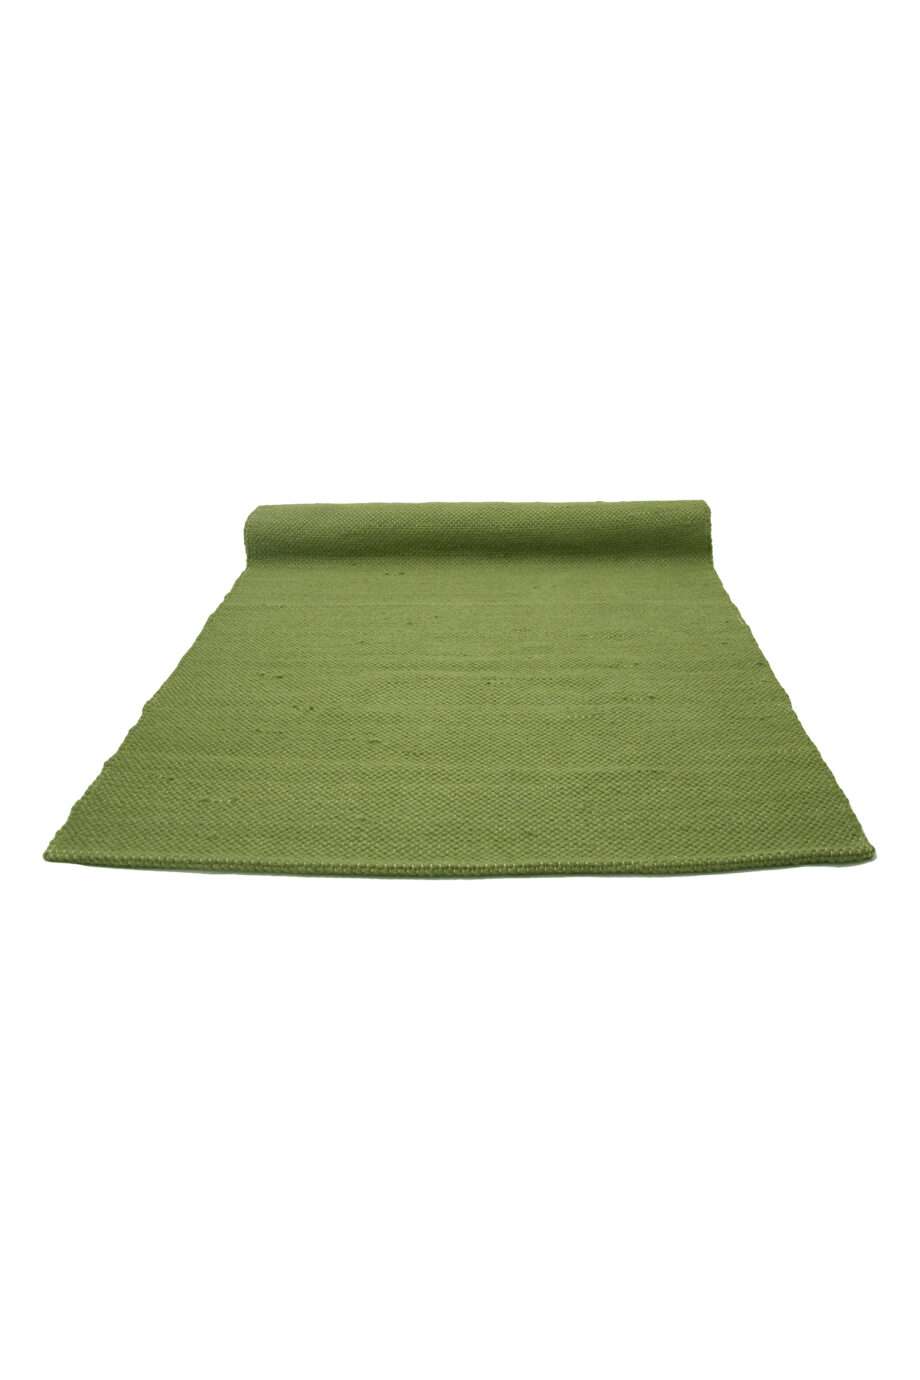 nordic hunter green woven cotton floor runner xlarge